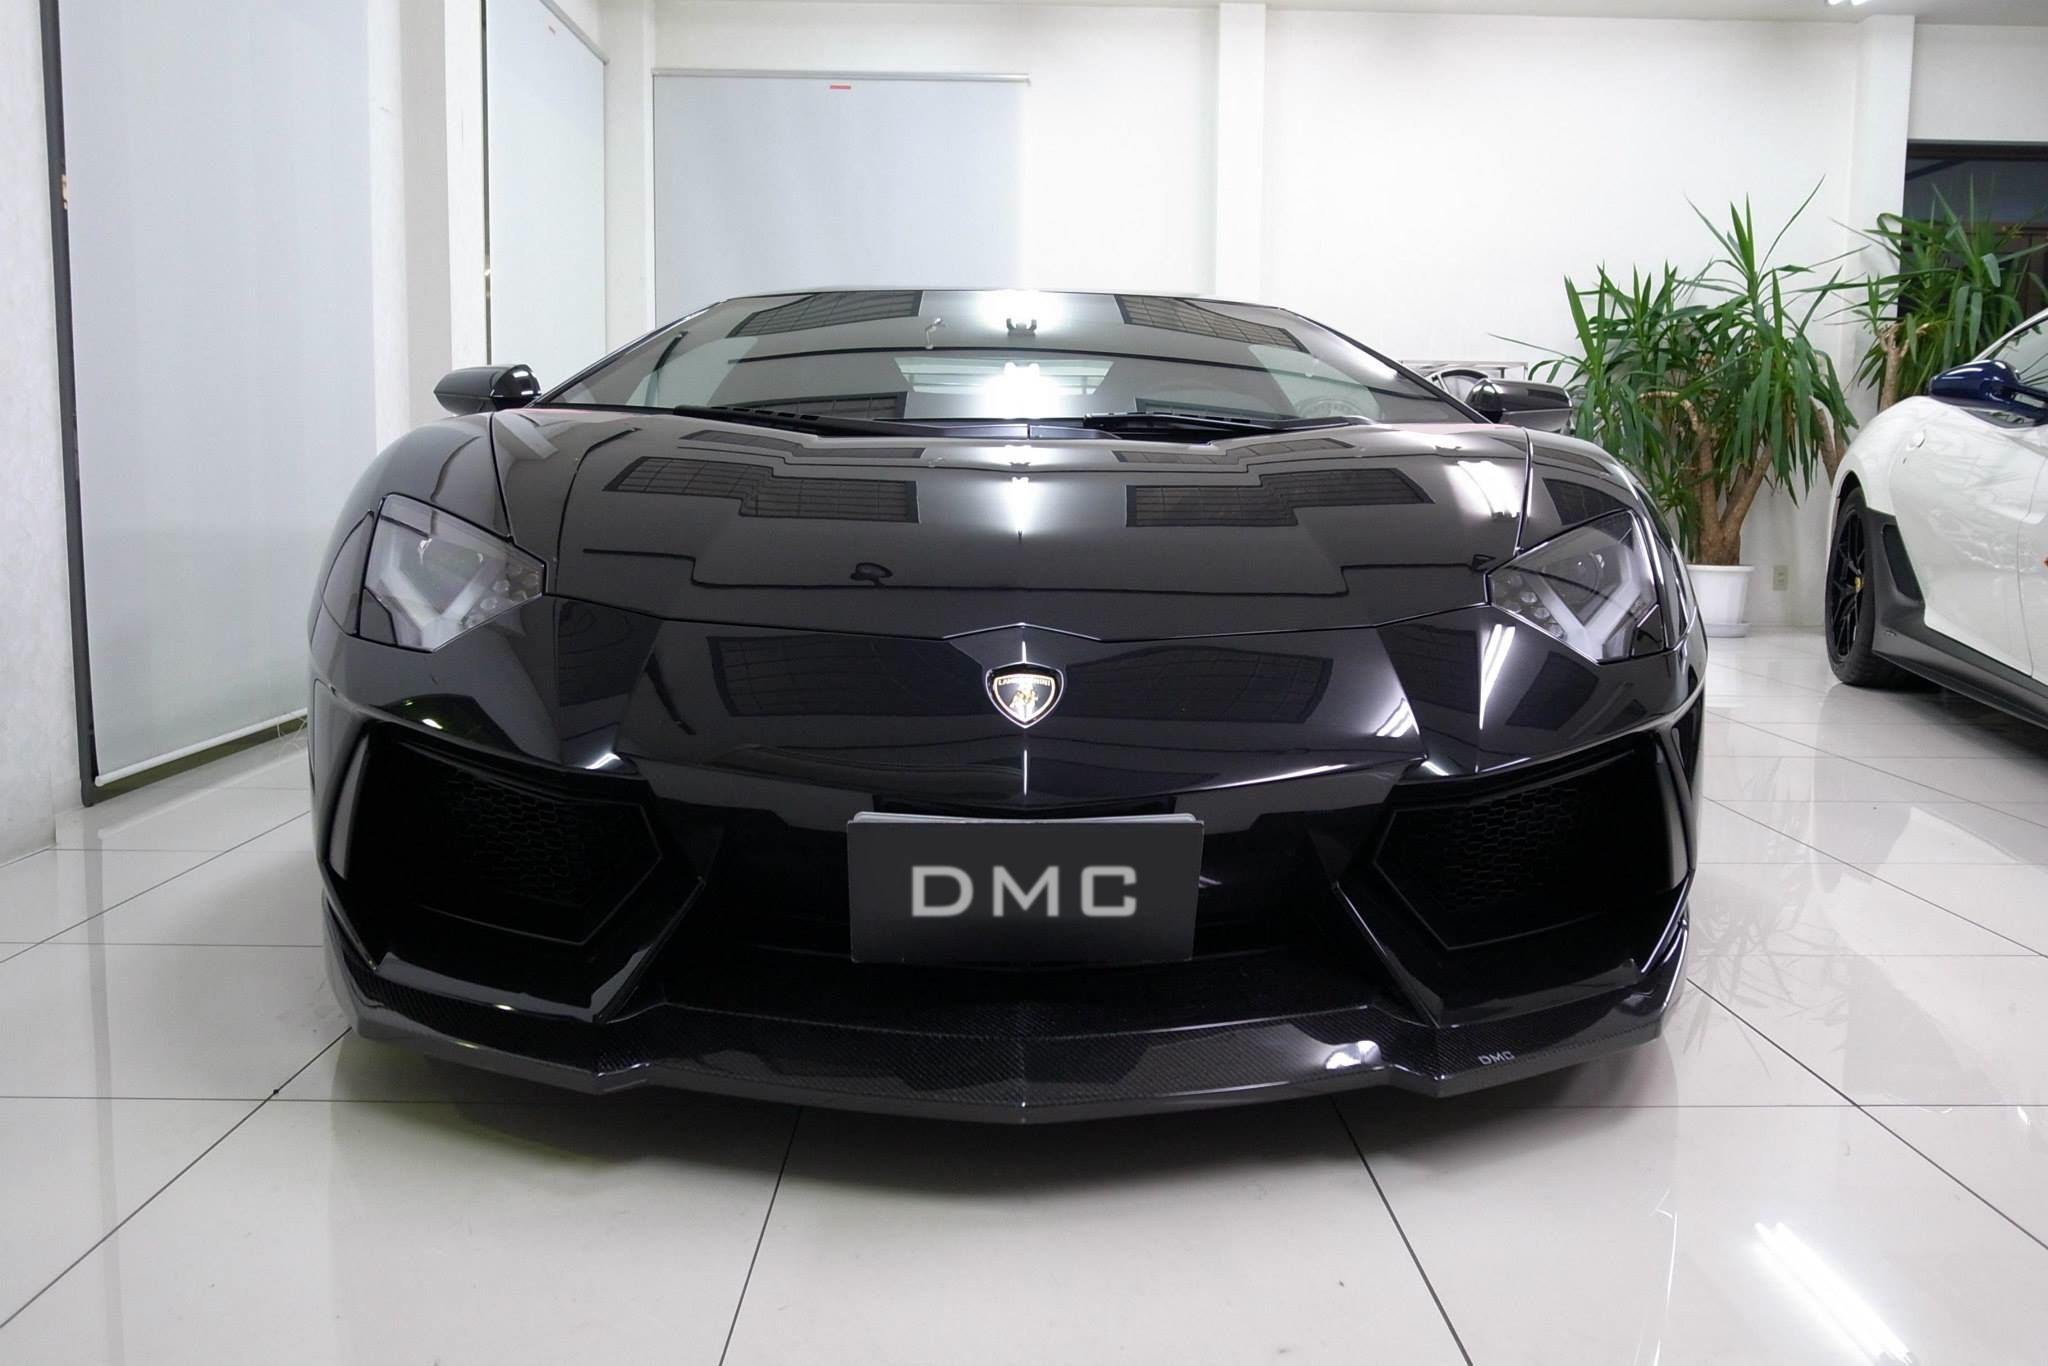 2013 Lamborghini Aventador by Autoproject-D and DMC